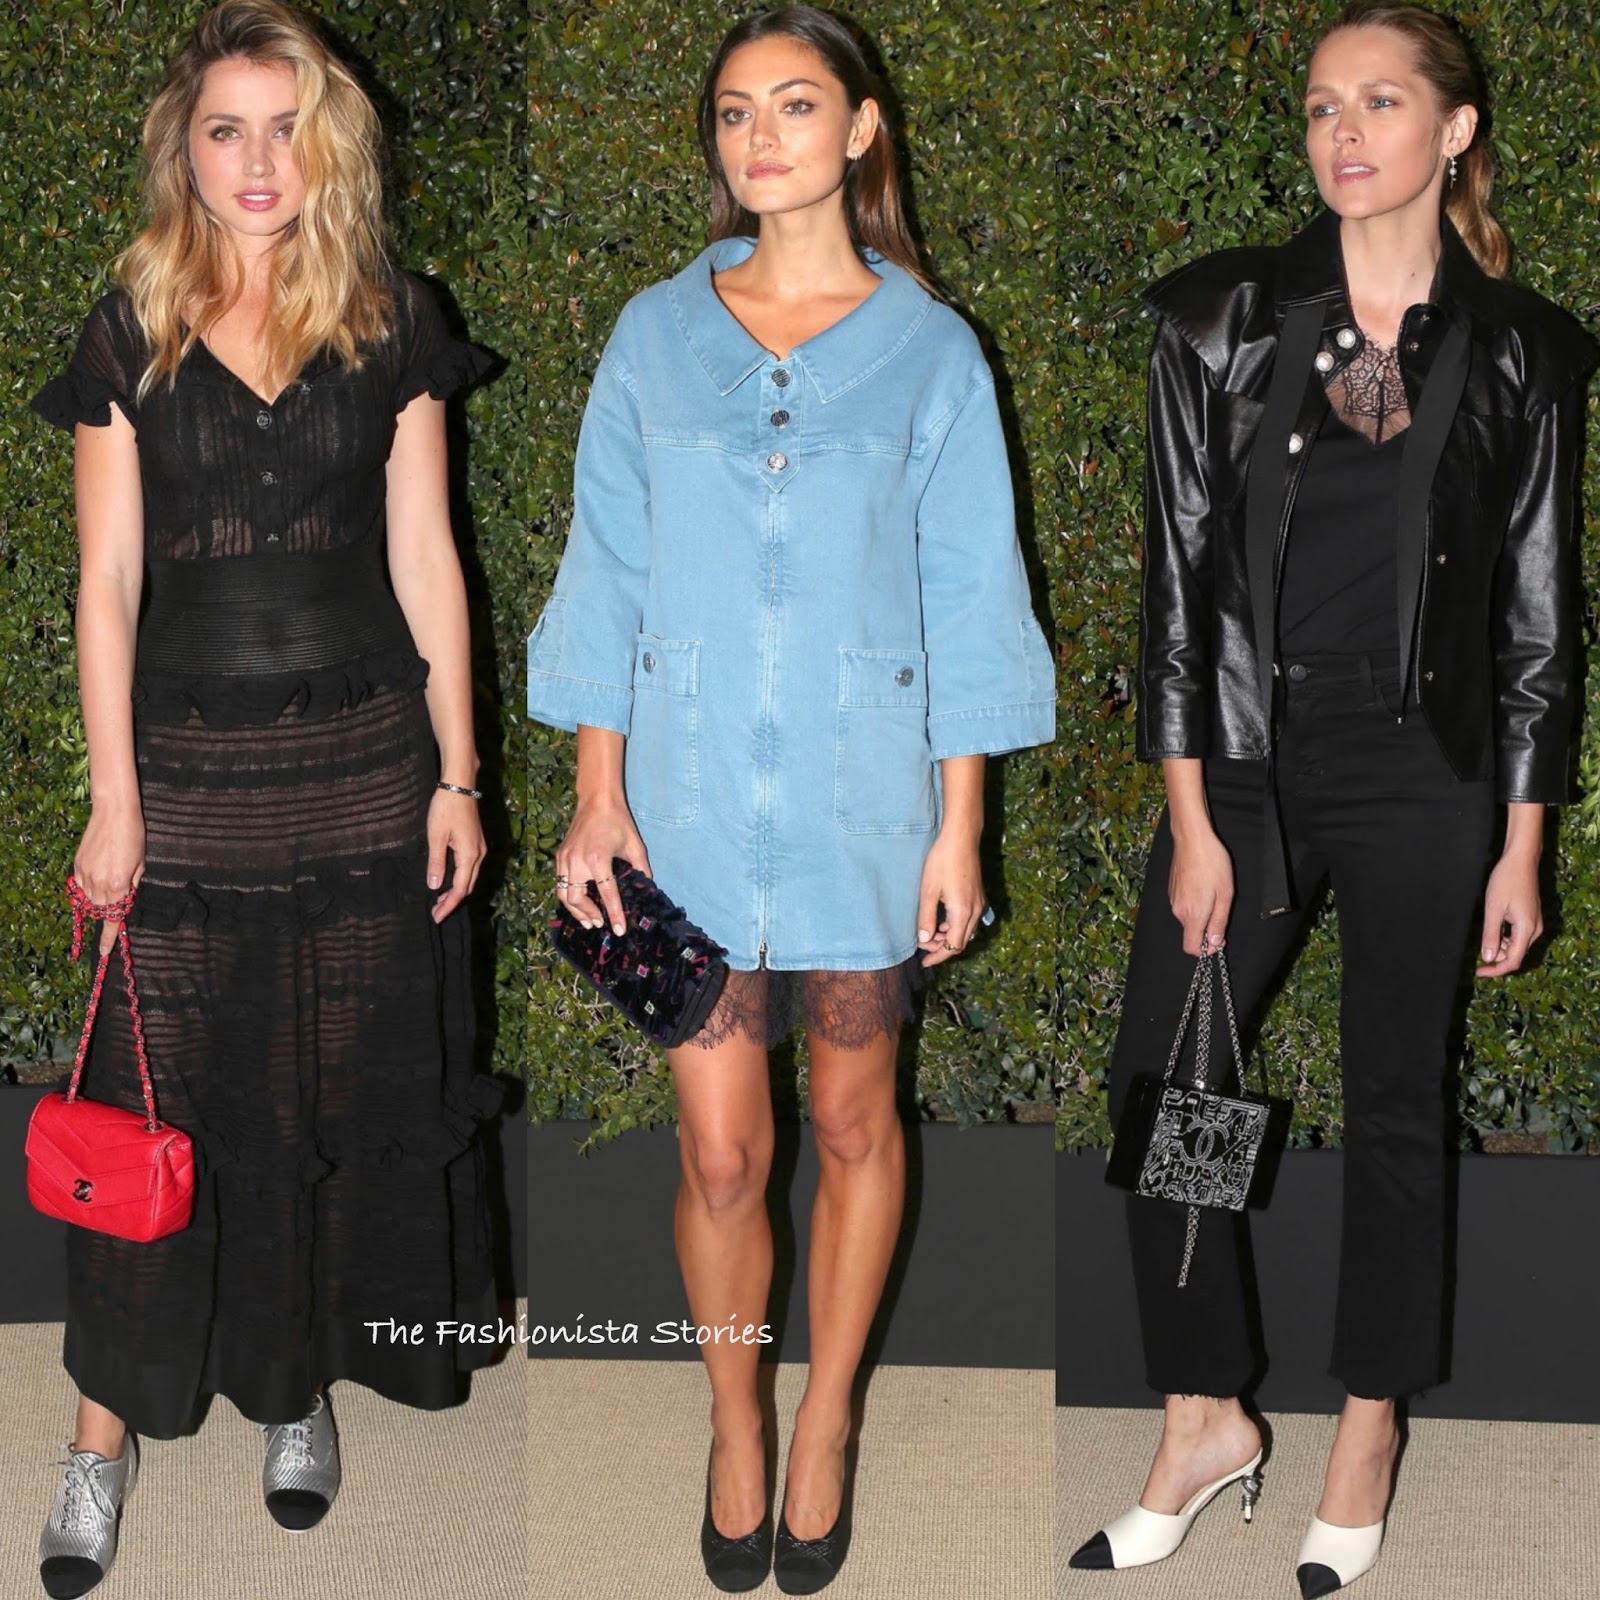 7 ways to wear Chanel's Gabrielle Handbag 